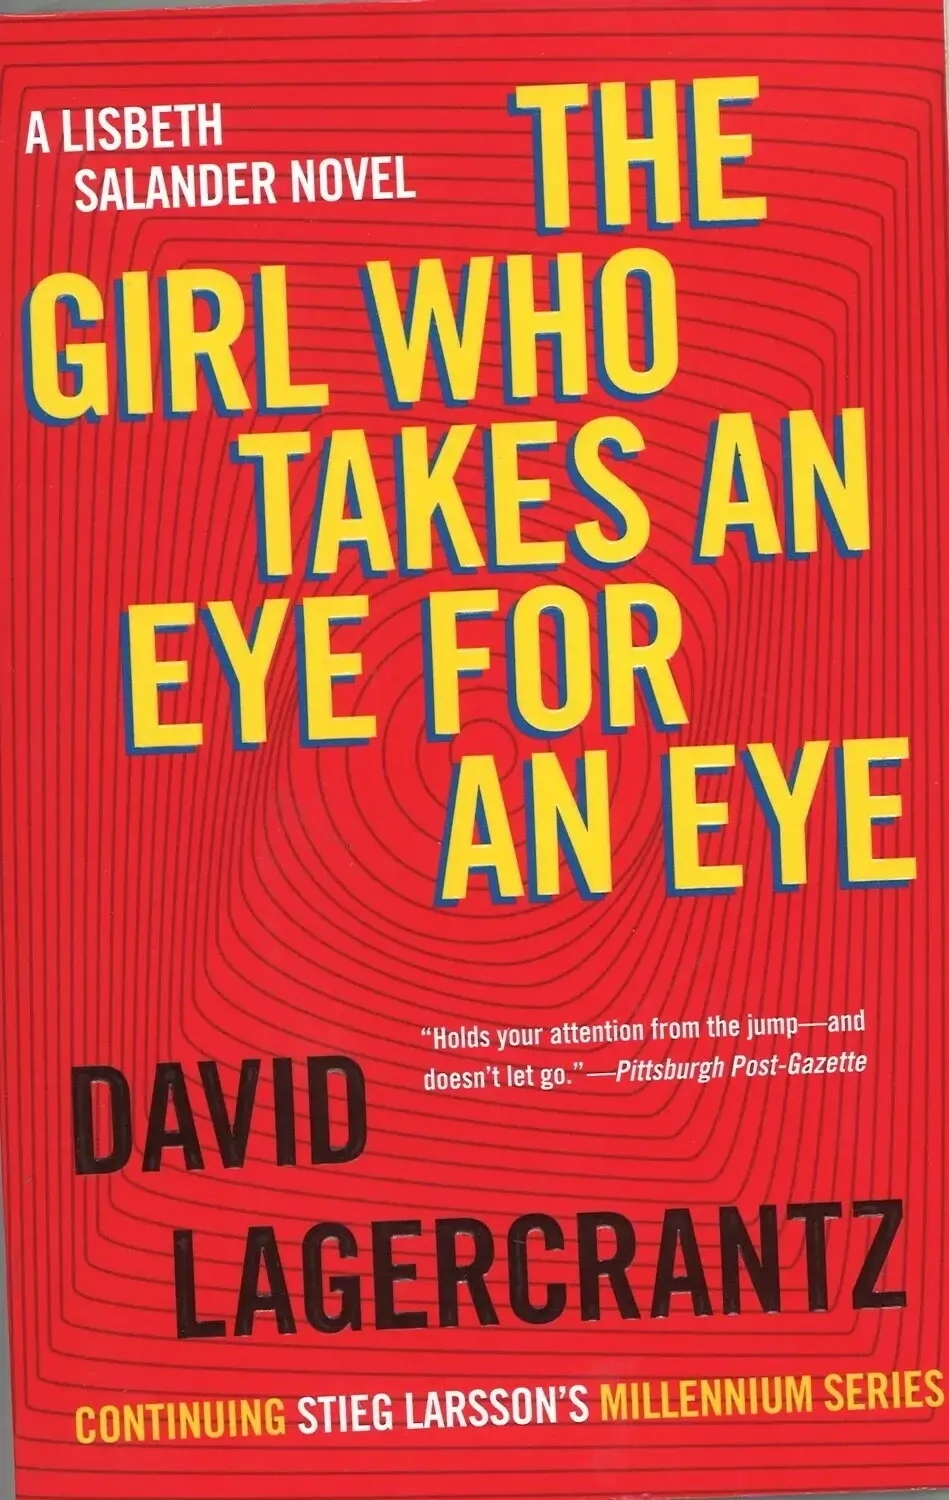 The Girl Who Takes an Eye for an Eye: A Lisbeth Salander novel by David Lagercrantz